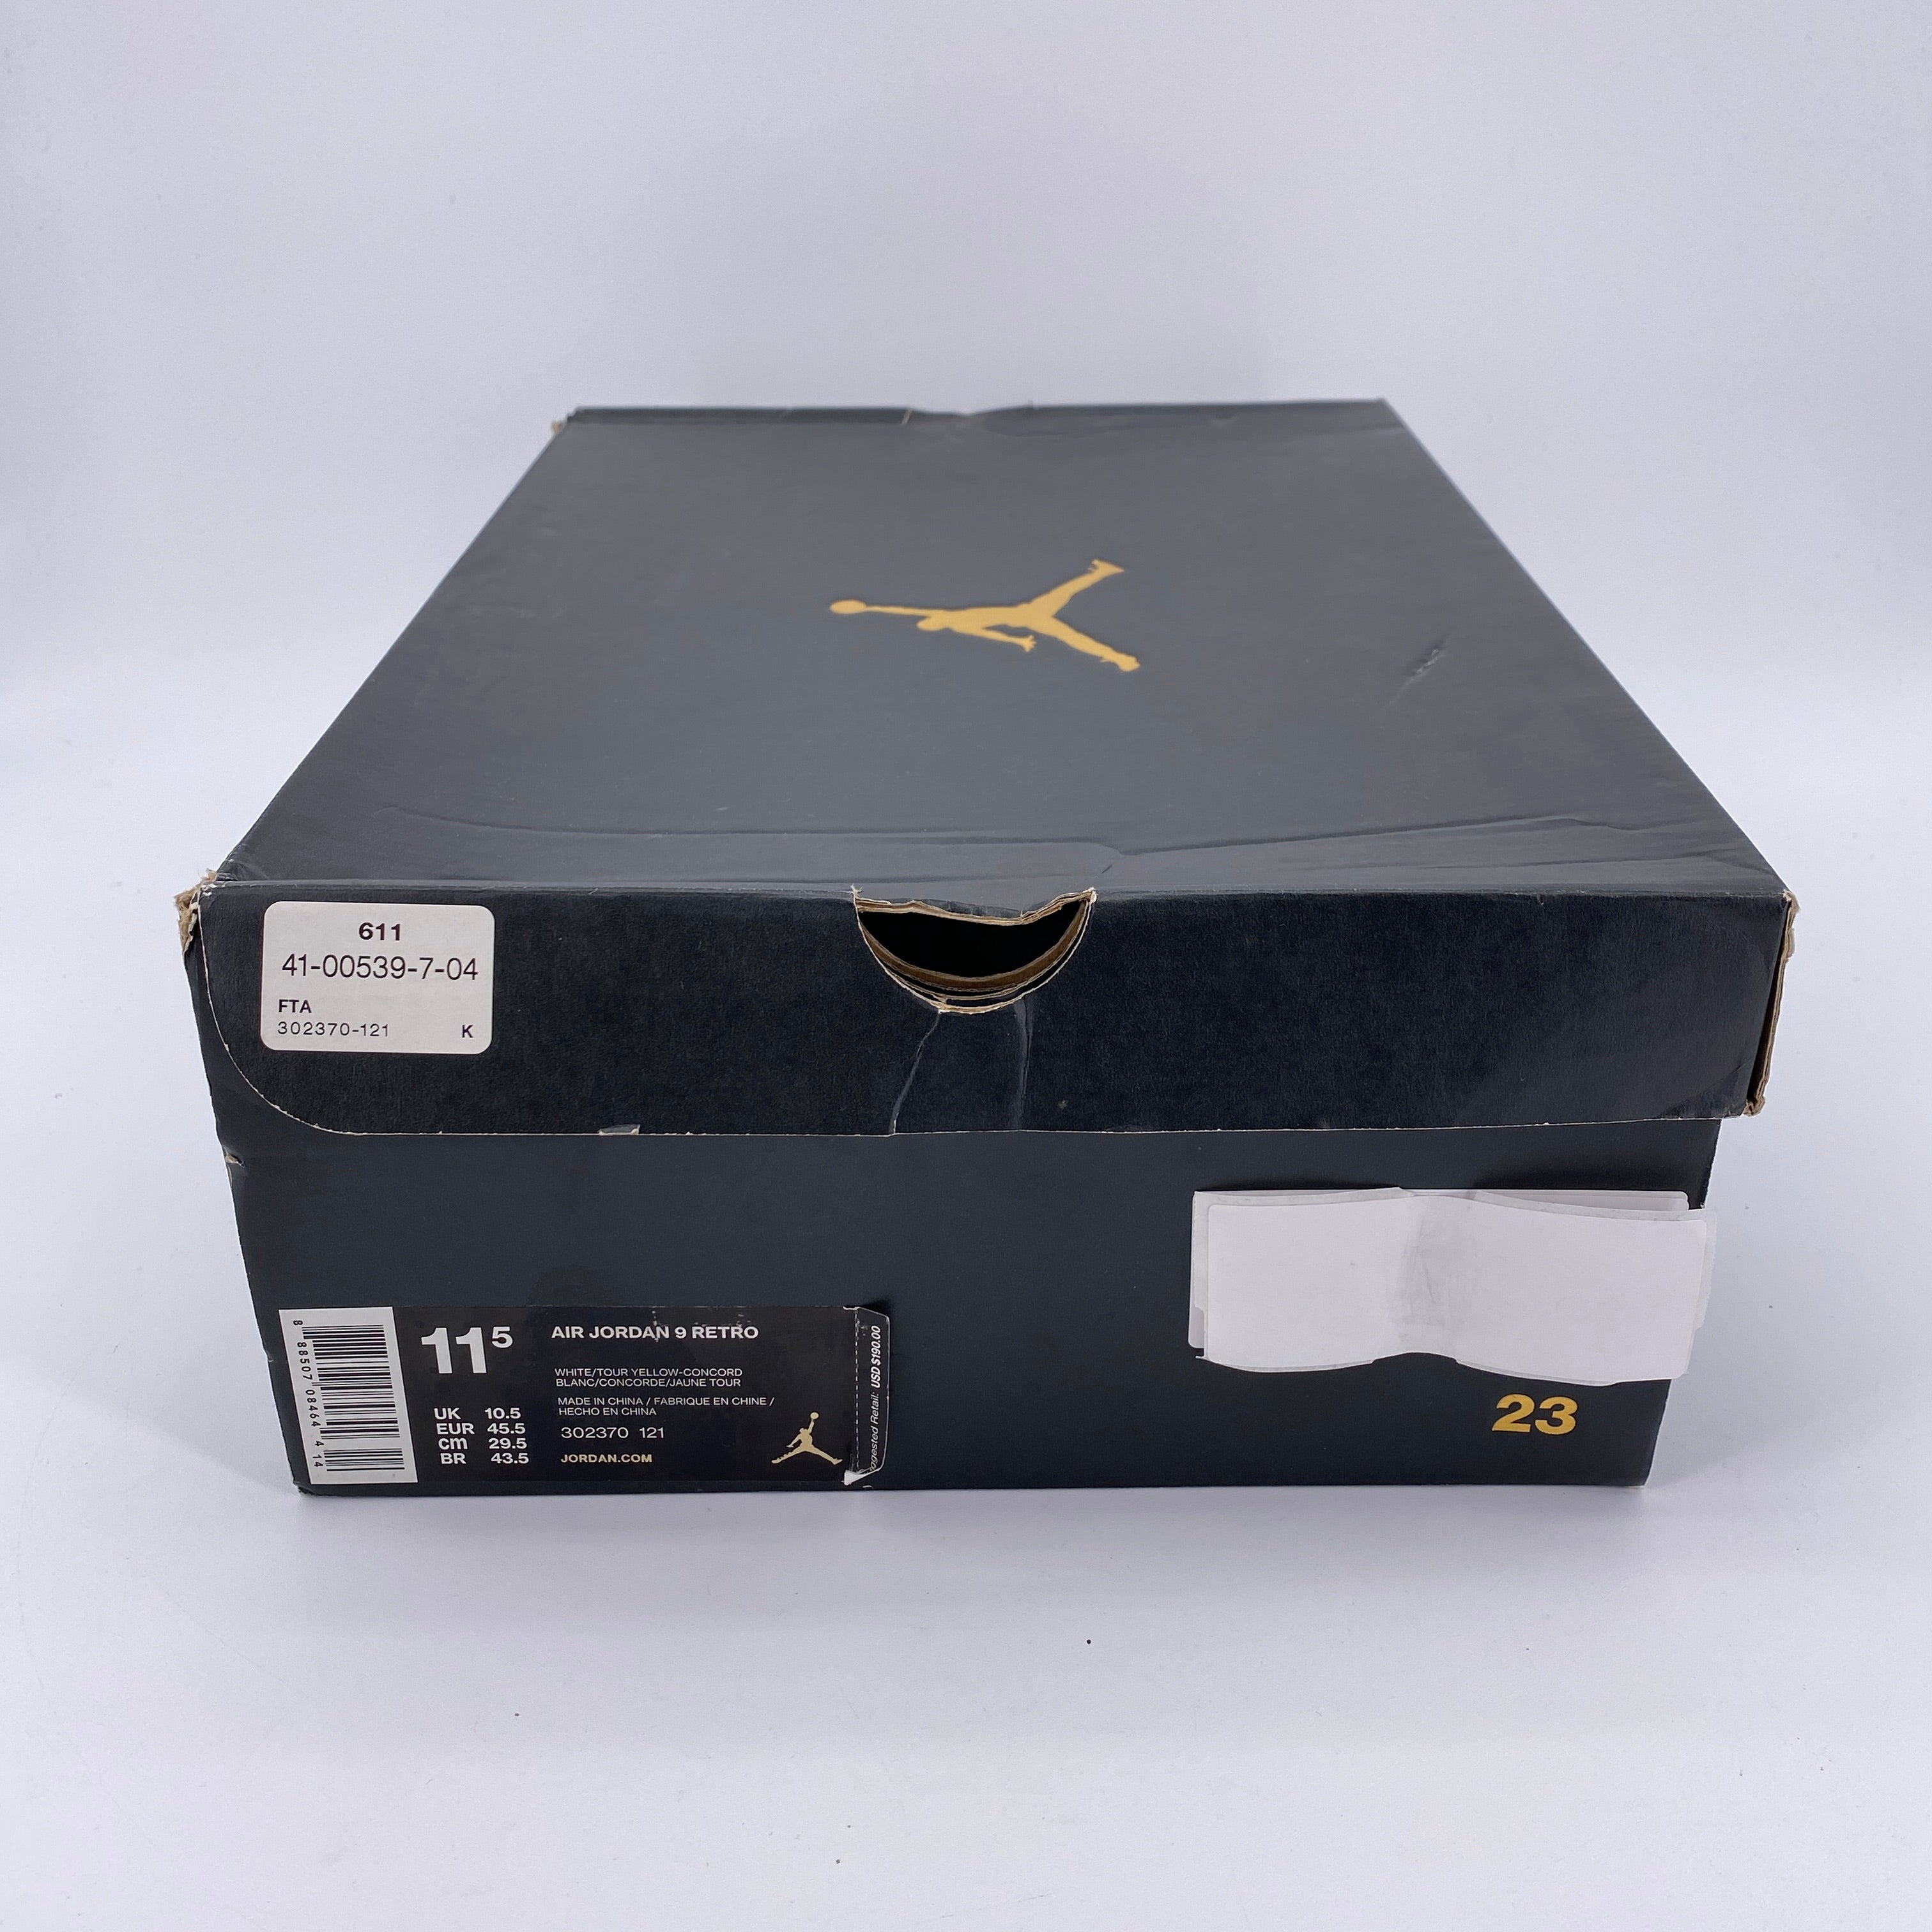 Air Jordan 9 Retro "Kobe Bryant Pe" 2016 New Size 11.5